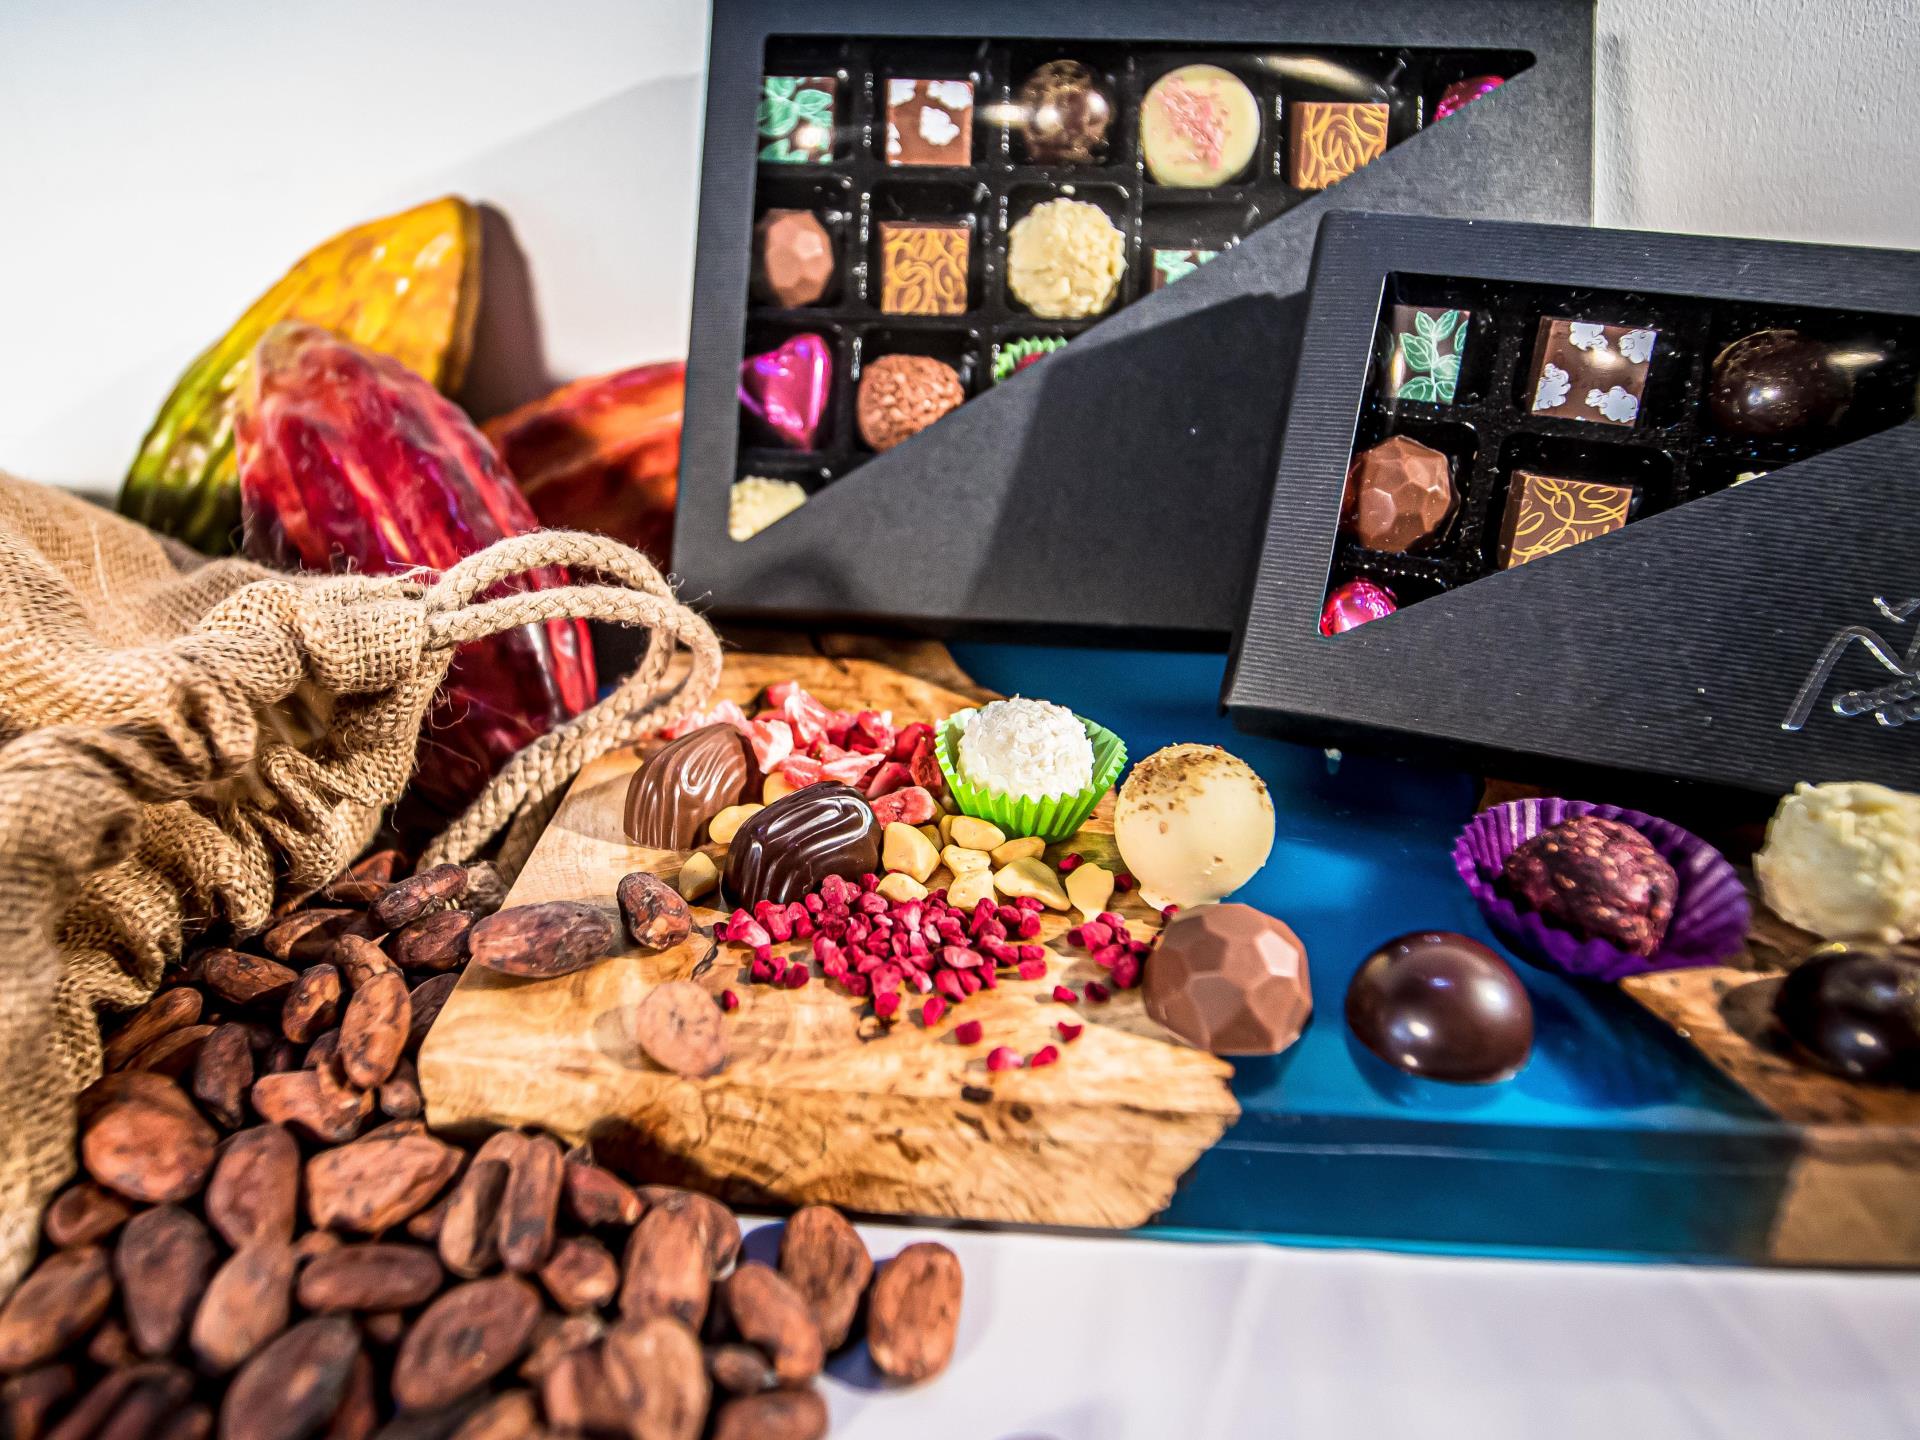 Chocolates and Fudge handmade by Chocablock